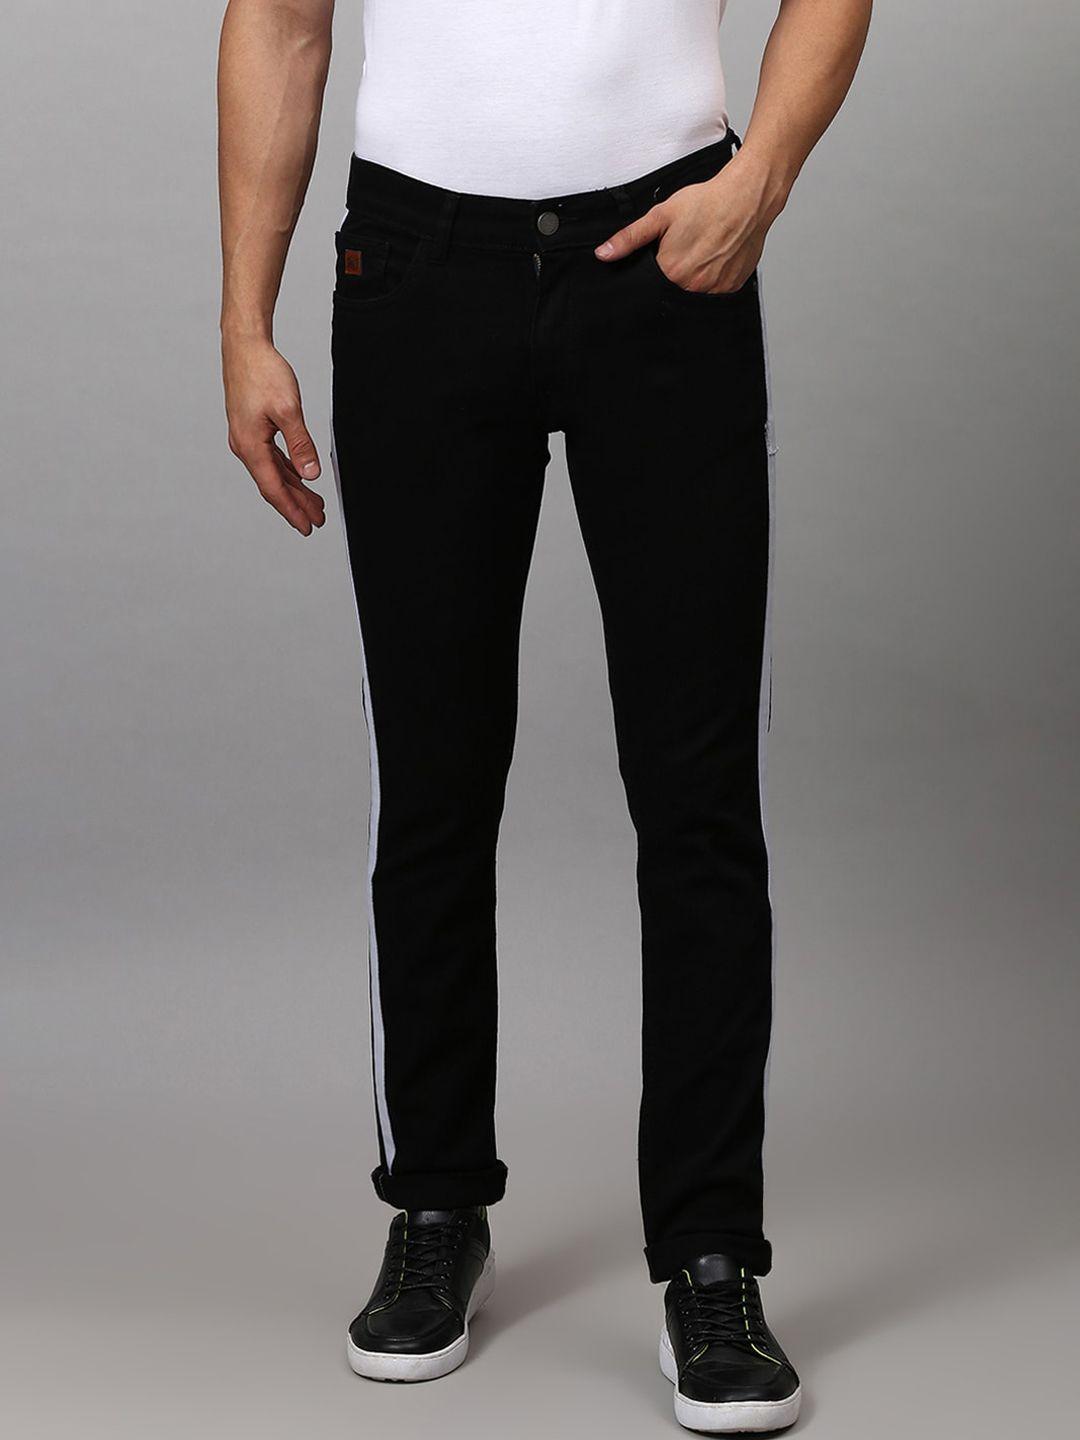 campus-sutra-men-black-slim-fit-stretchable-jeans